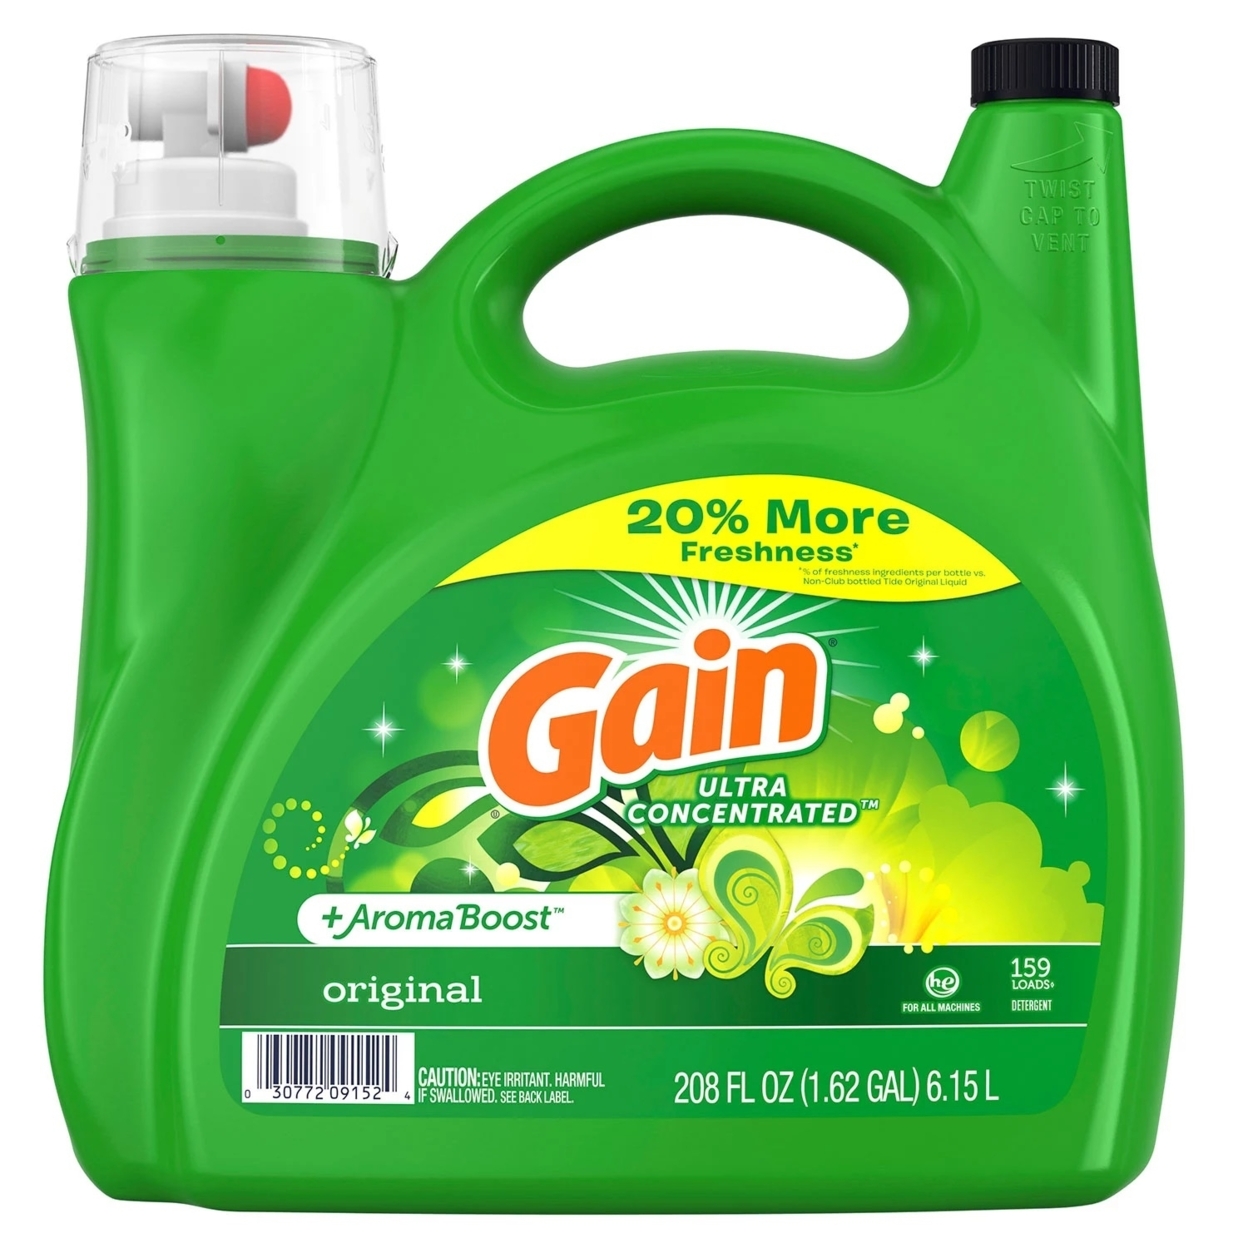 Gain Ultra Concentrated + Aroma Boost Detergent, Original (208 Fl Oz, 159 Loads)